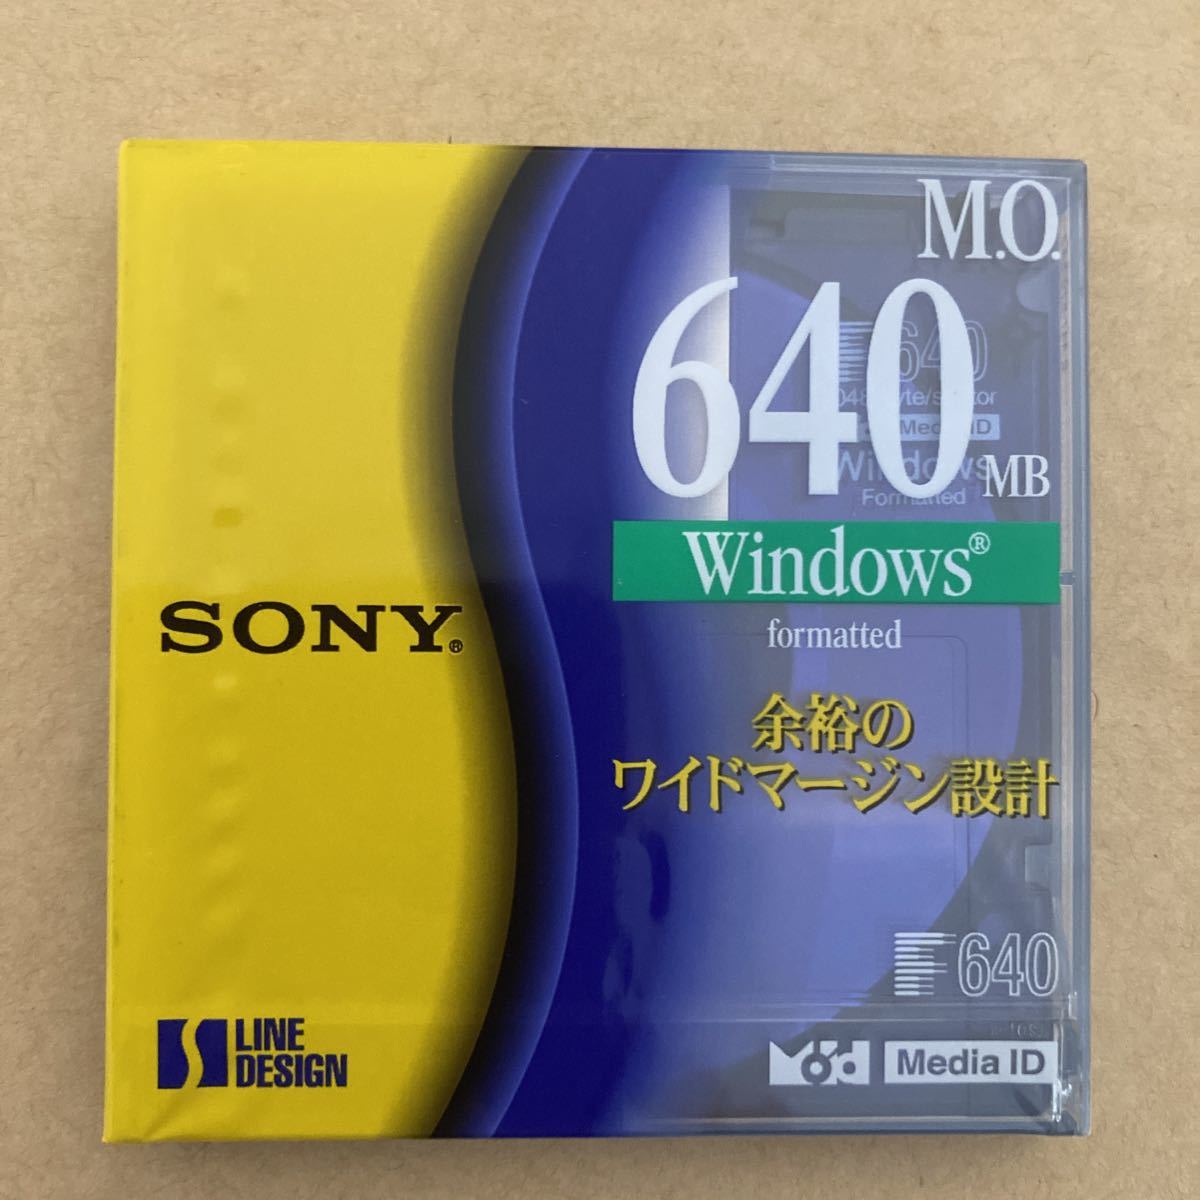 SONY EDM-640CDF(Windows формат settled 3.5 дюймовый MO диск ) ③